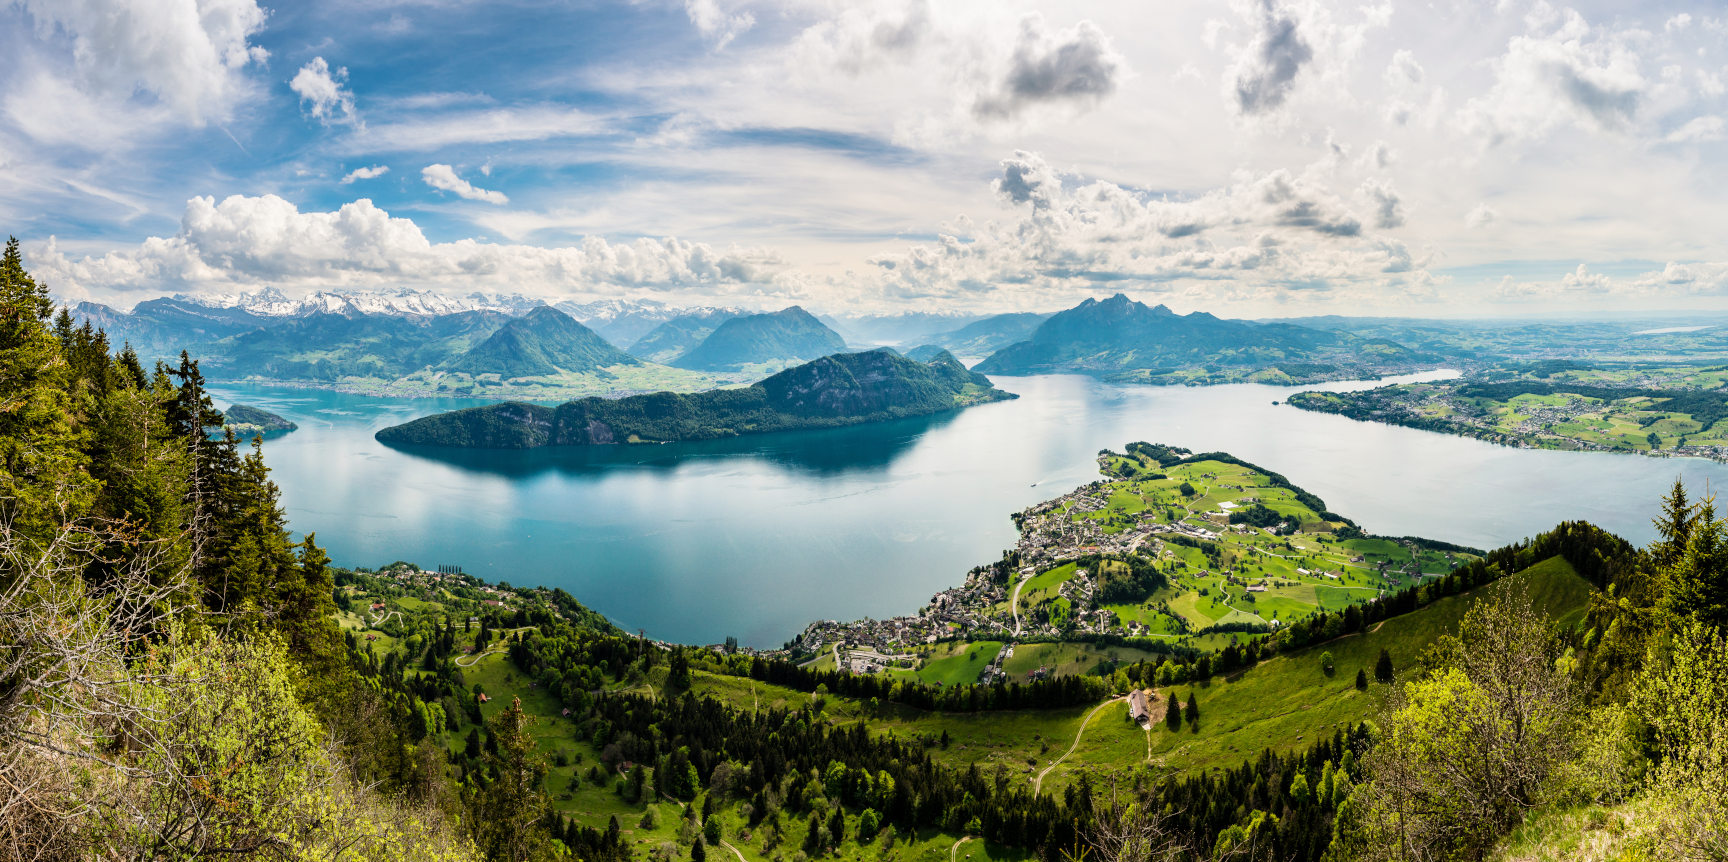 Enlarged view: Lake of Lucerne